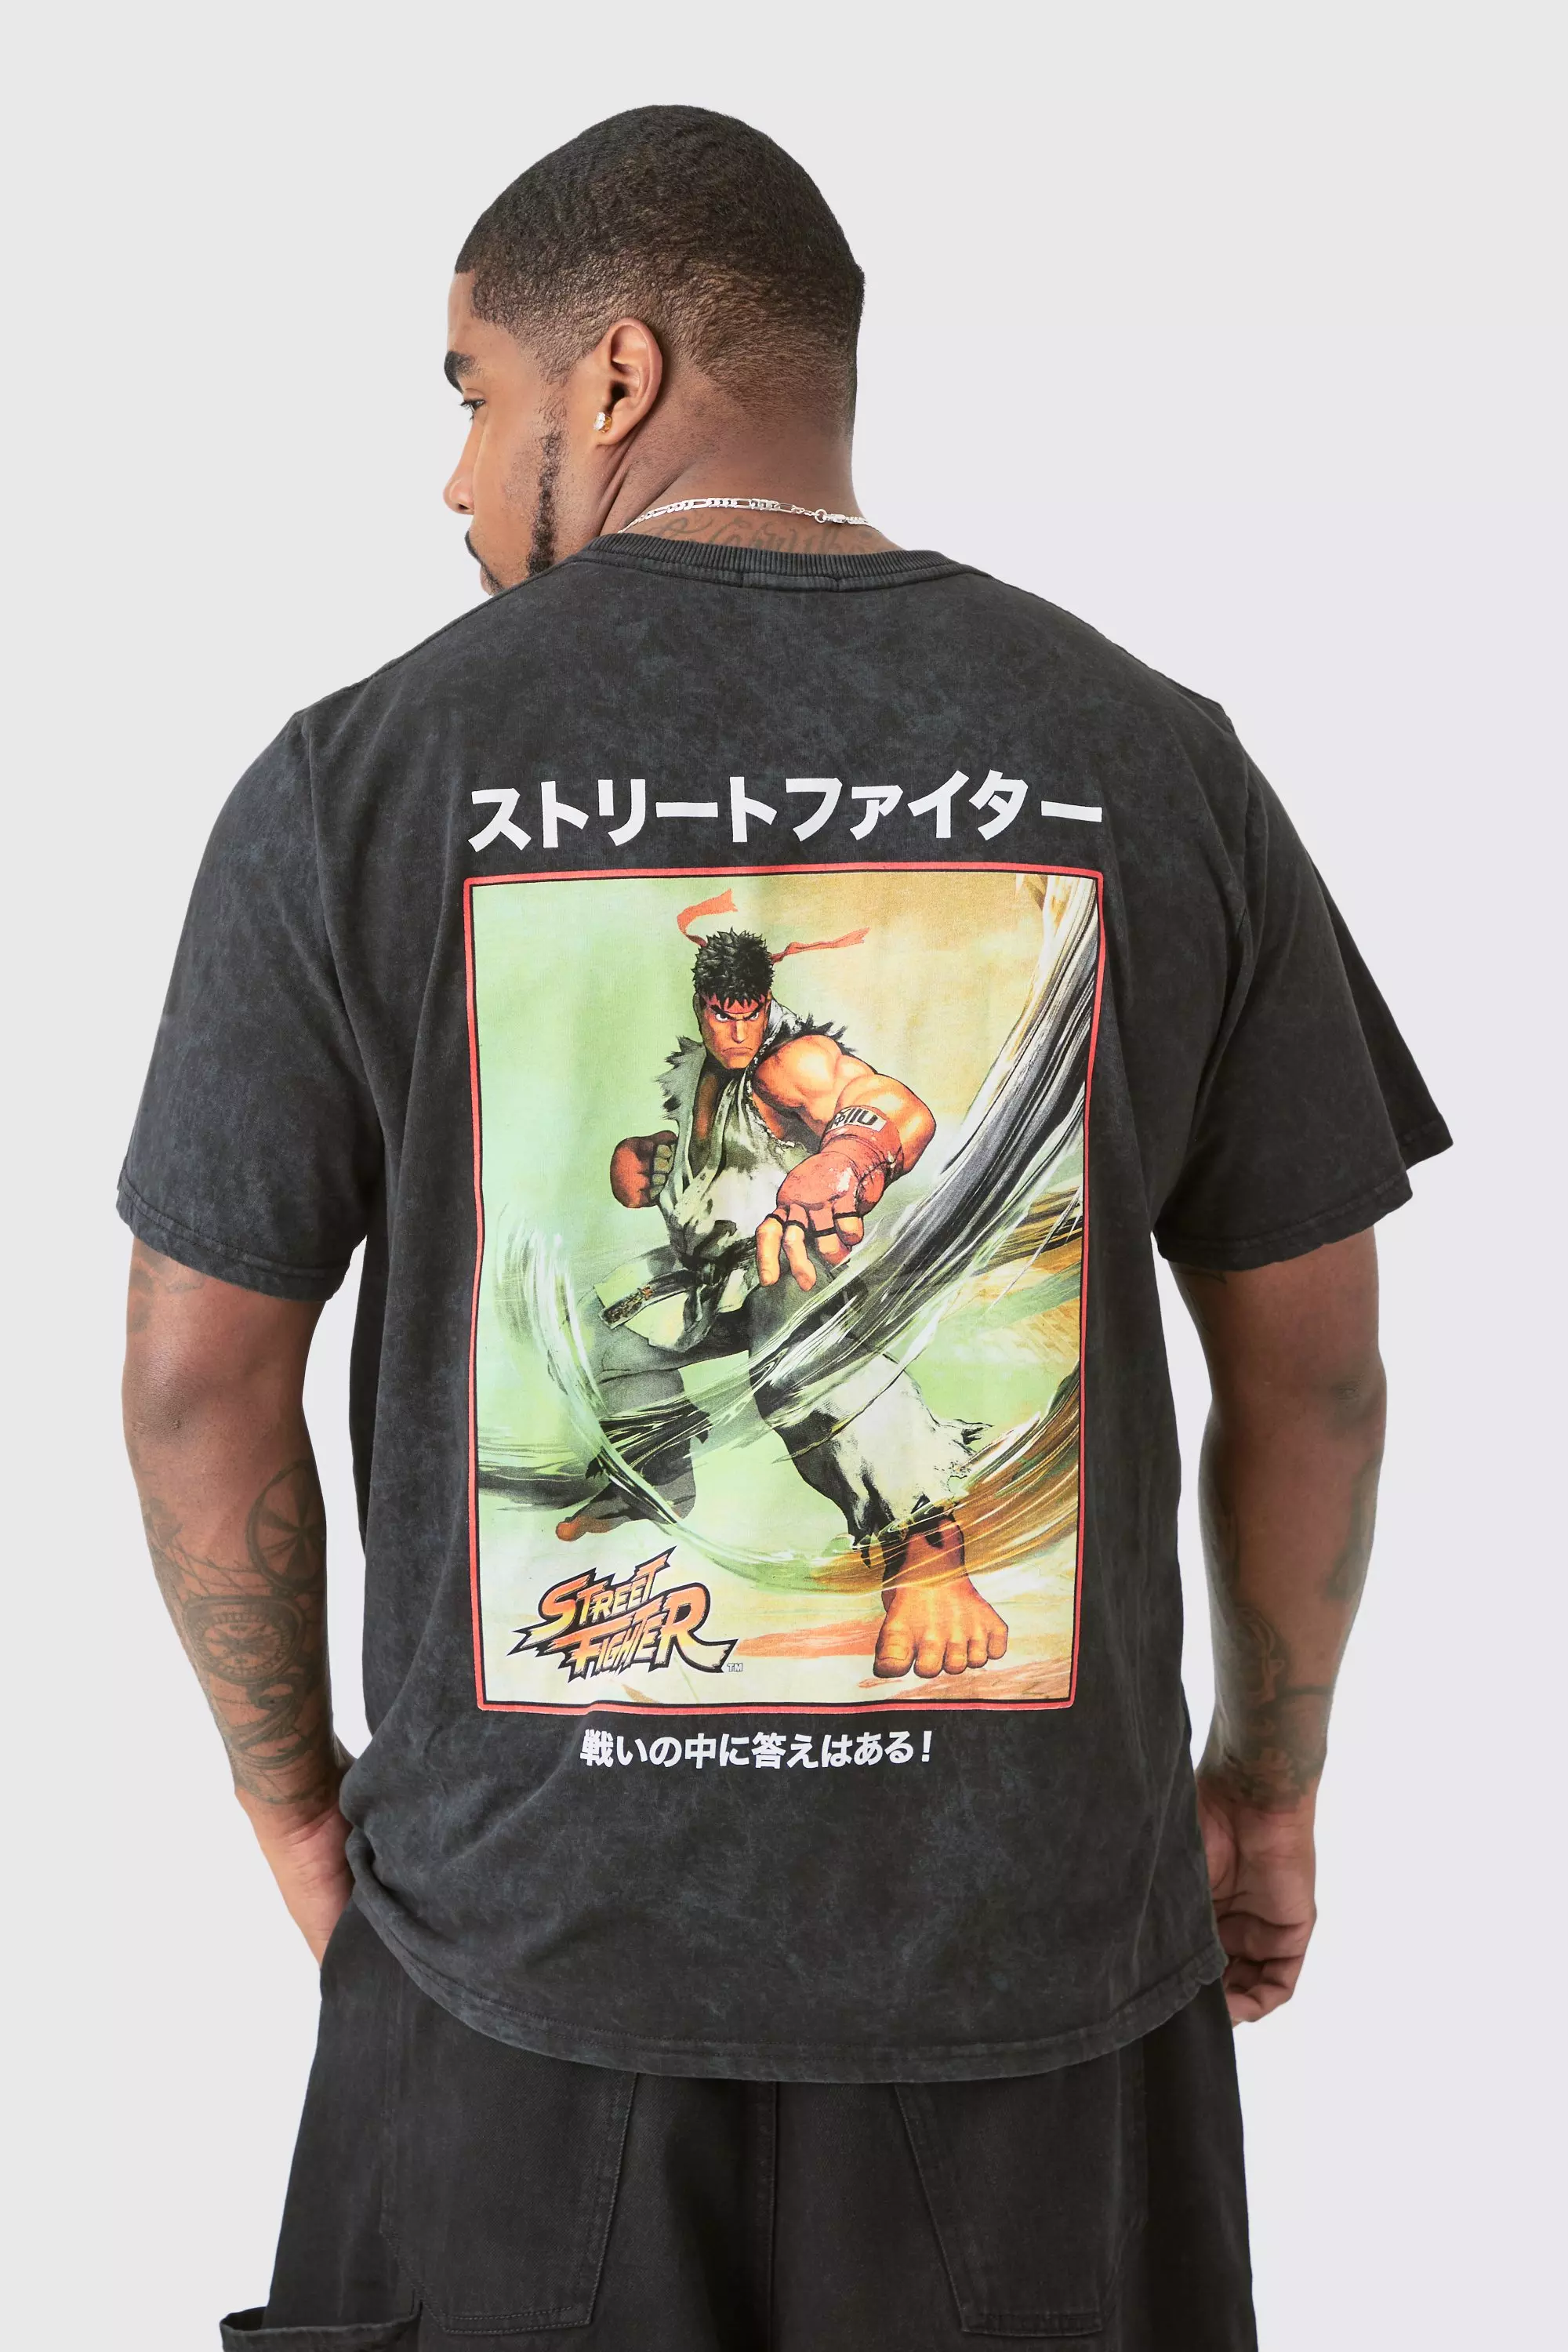 Plus Street Fighter Anime T-shirt In Black Black